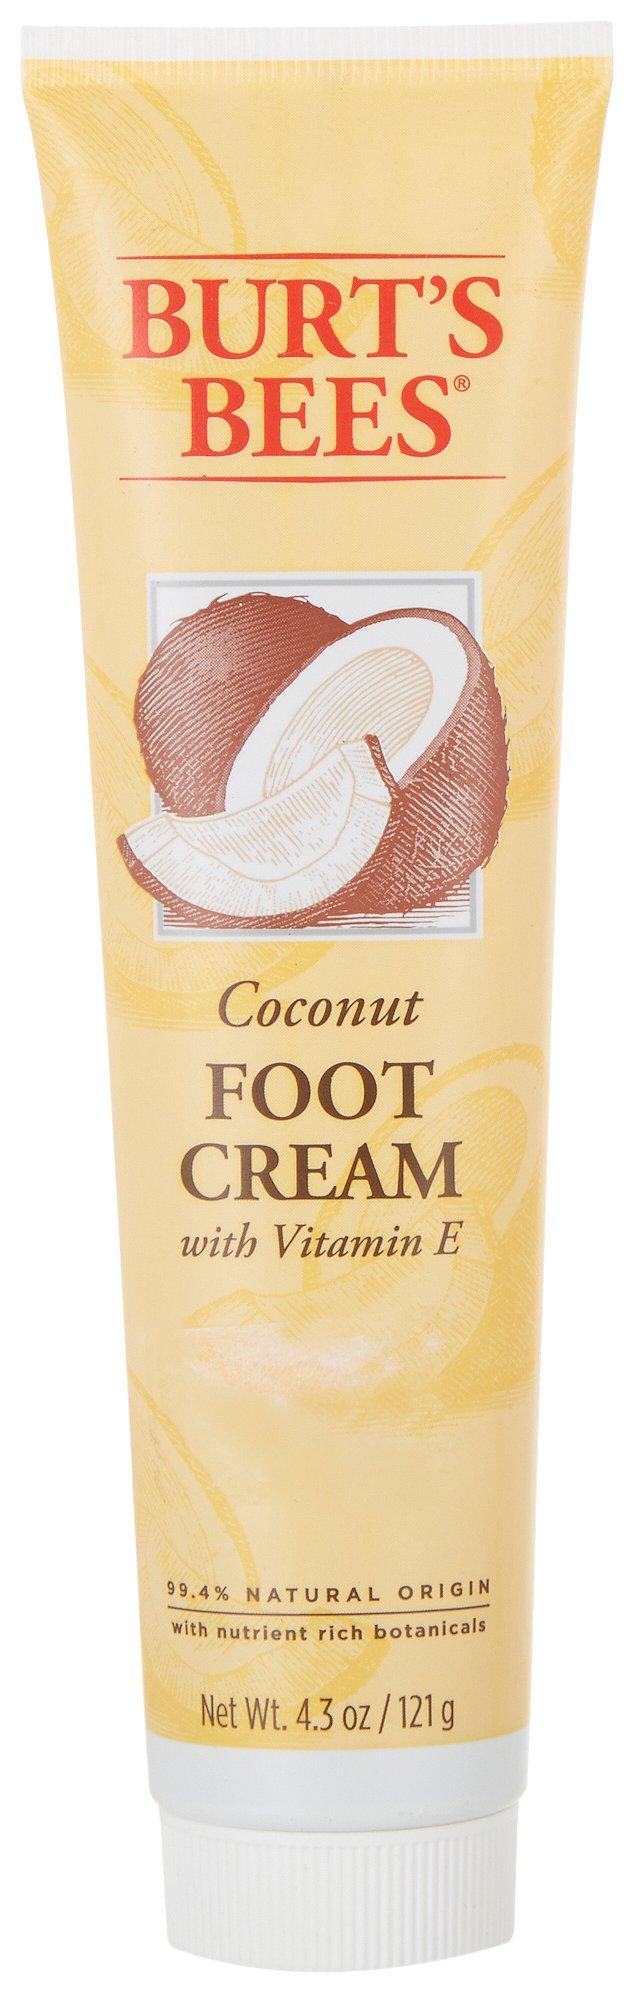 Burt's Bees Coconut Foot Cream With Vitamin E